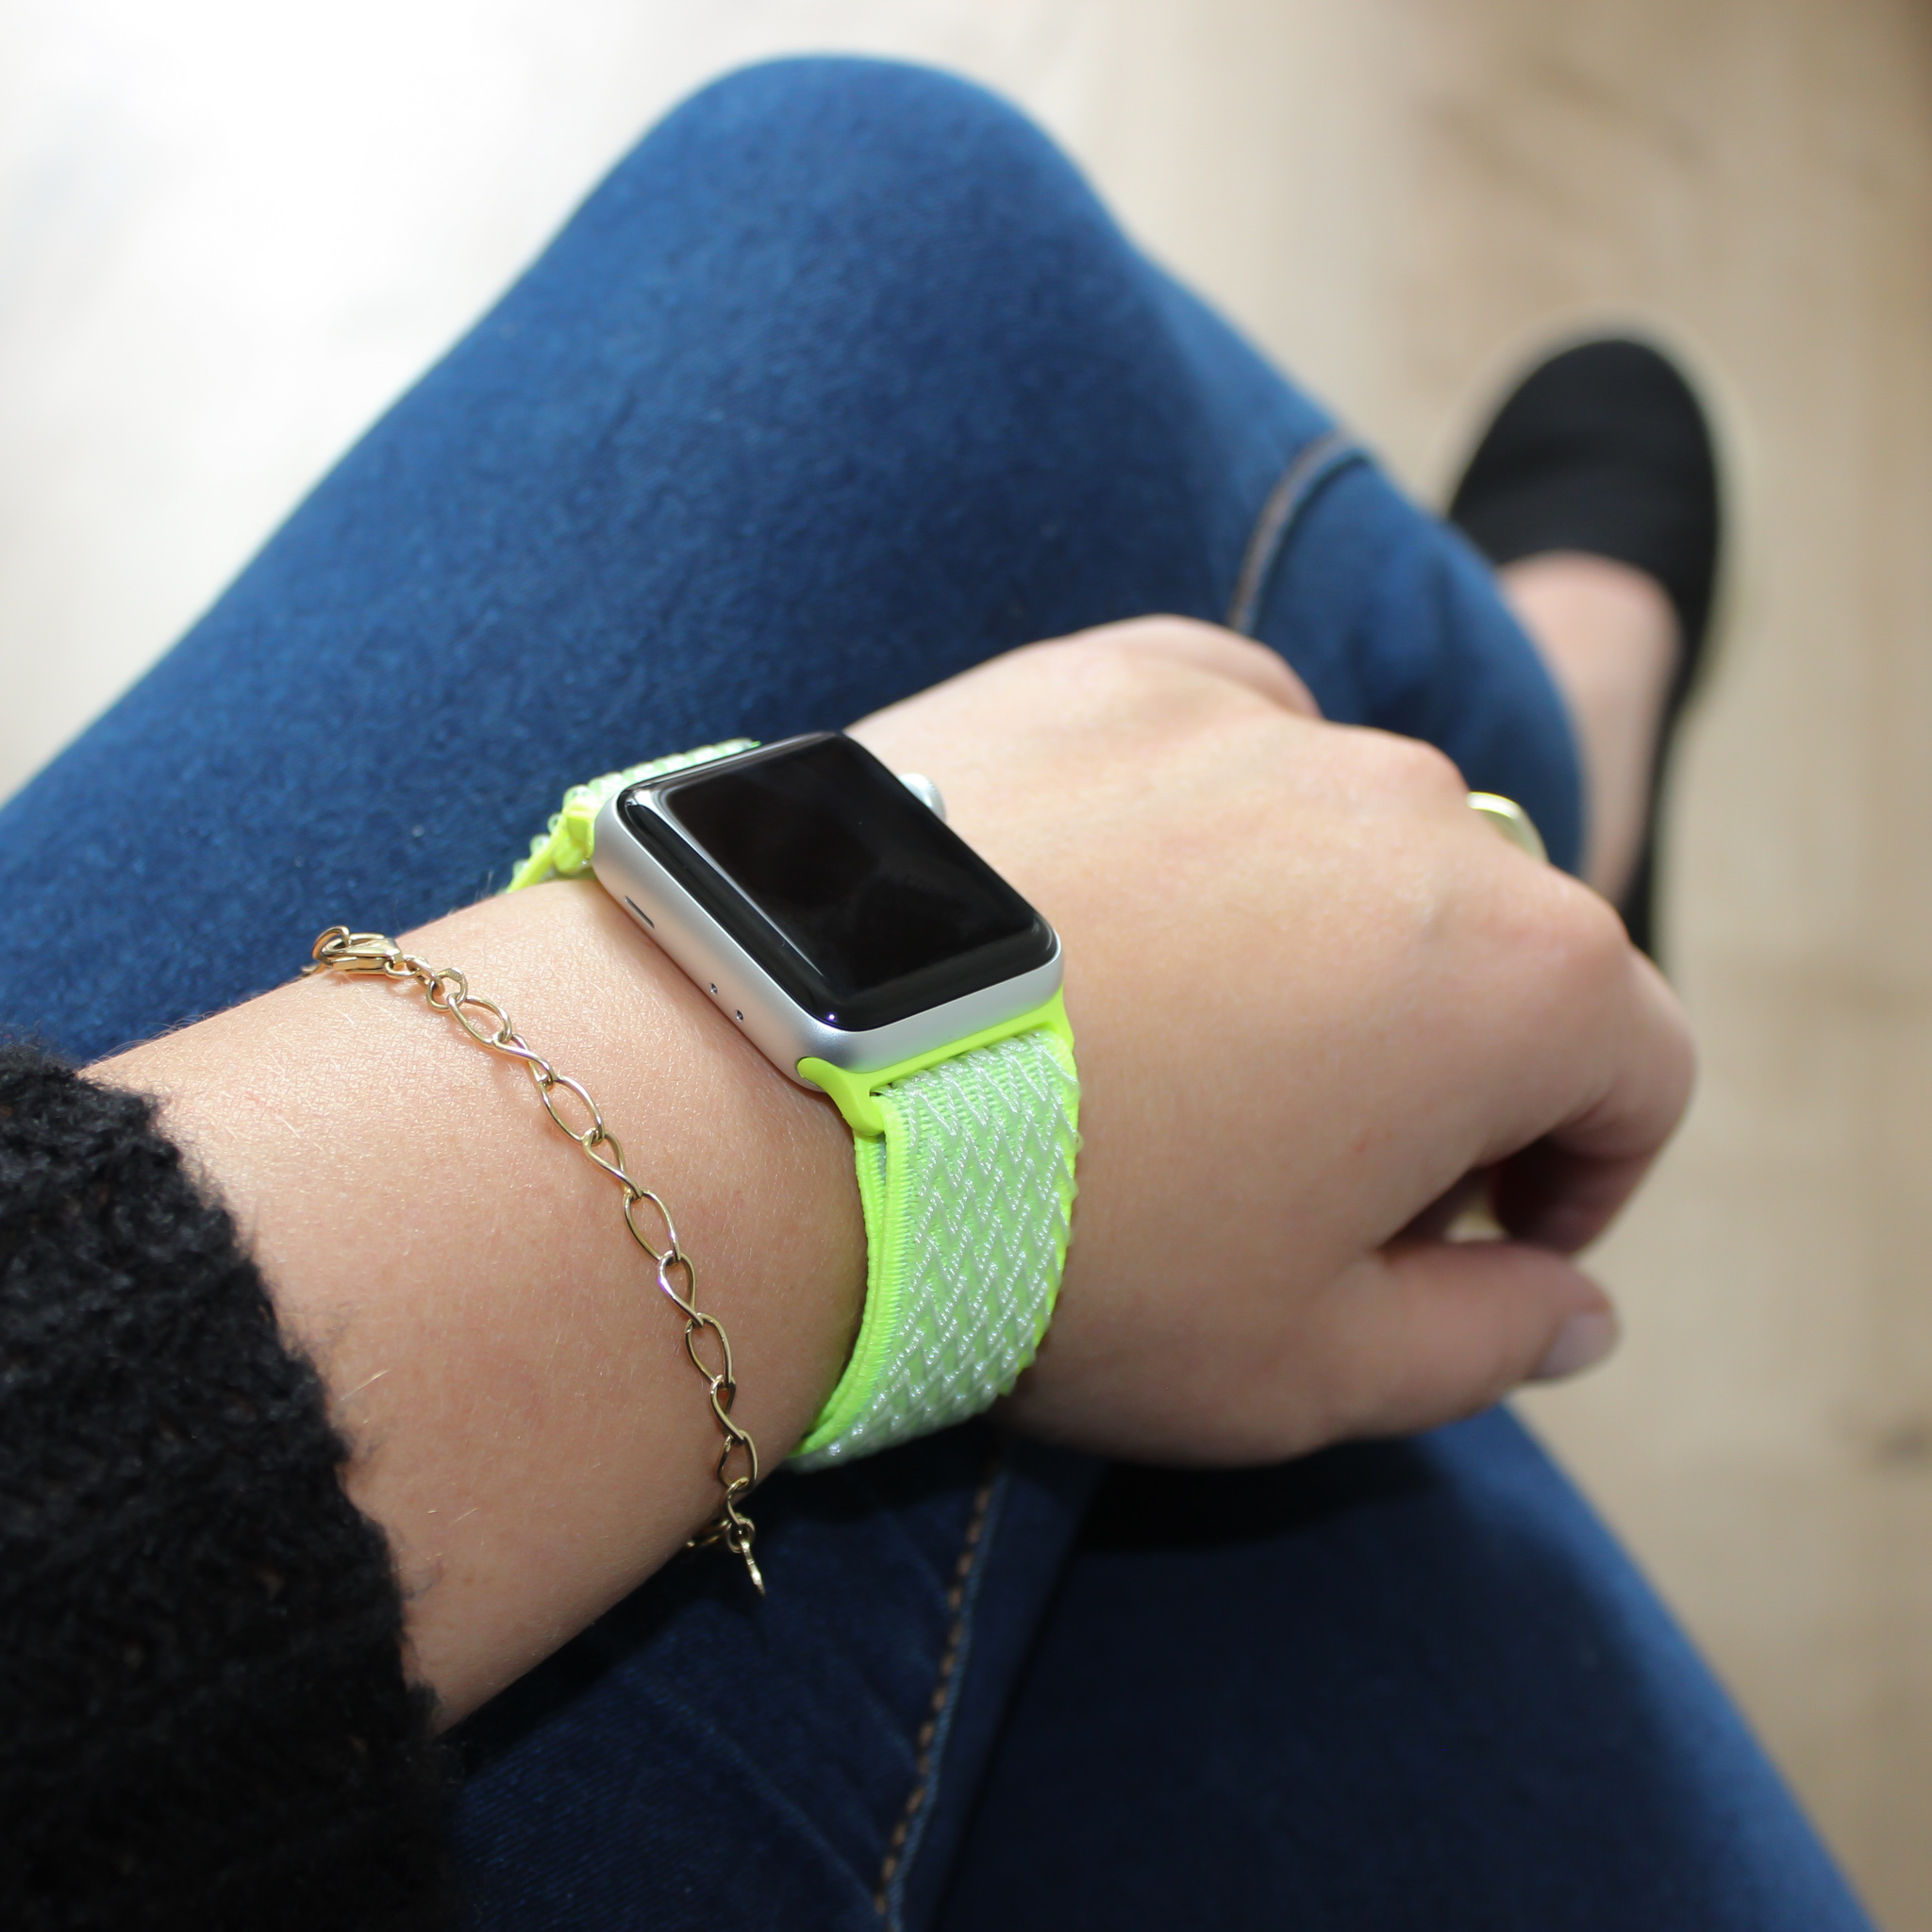 Apple Watch nylon geweven solo band - geel